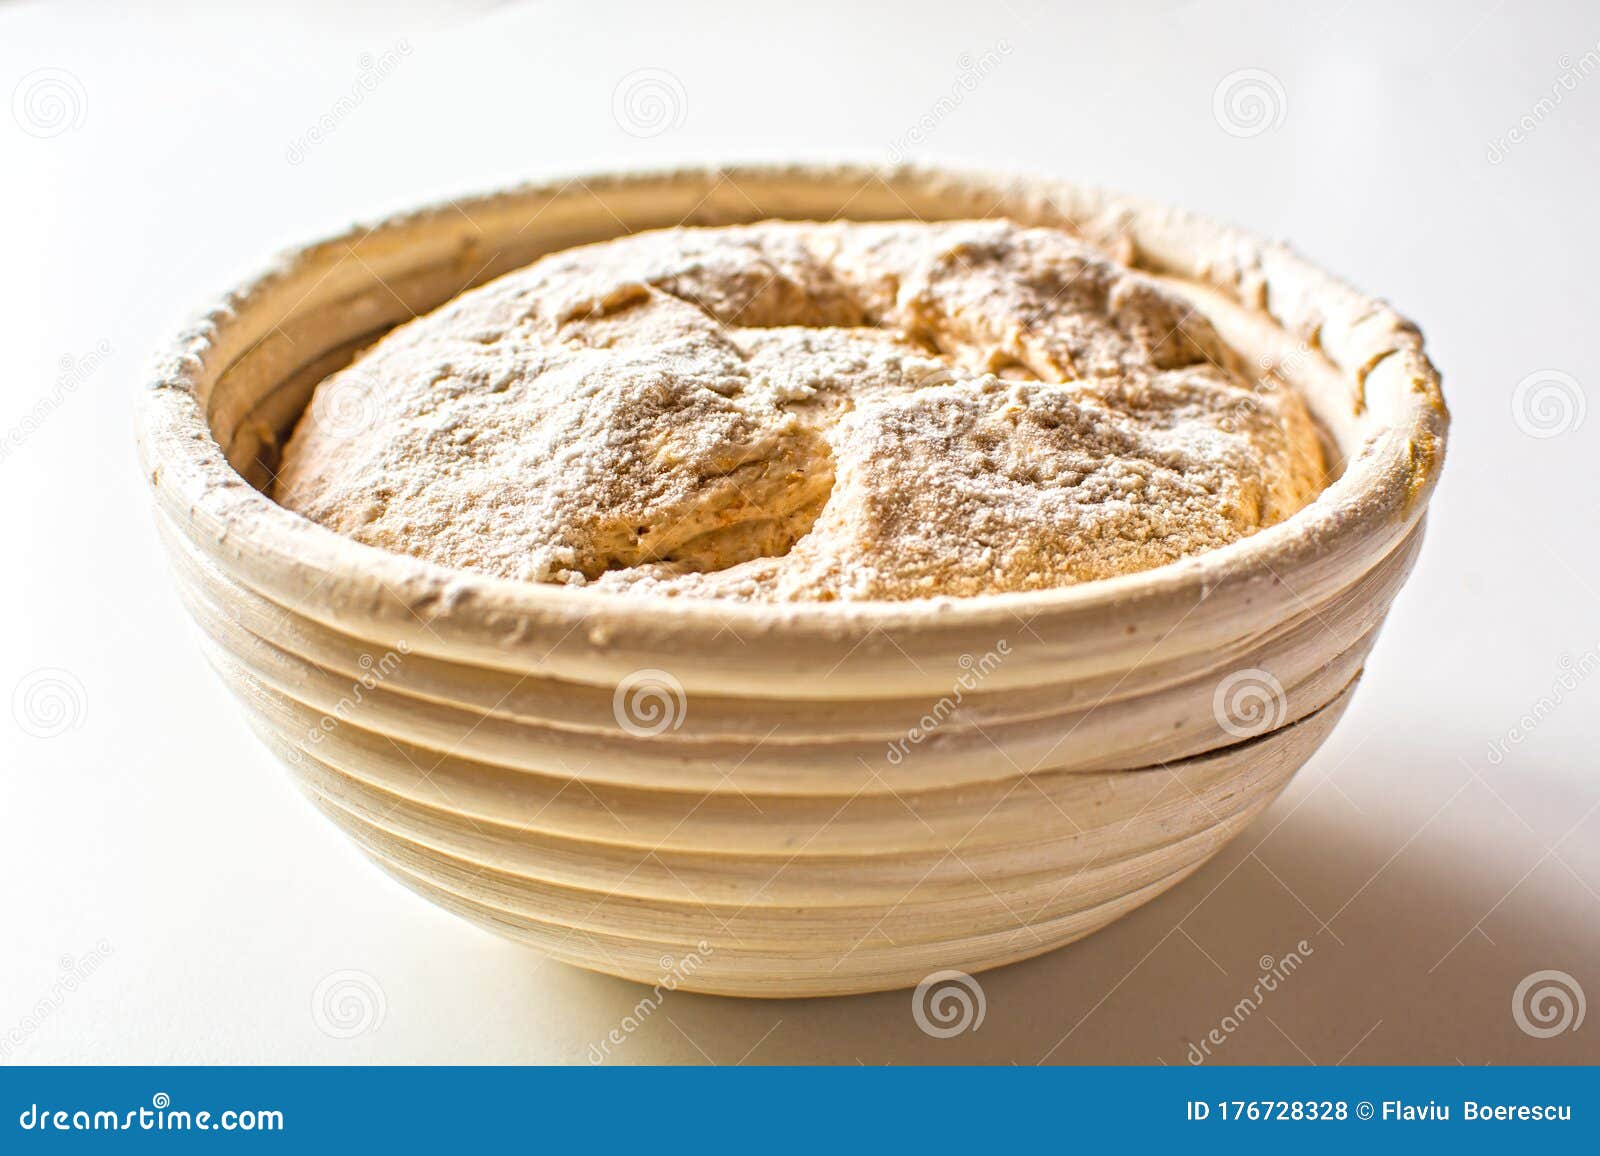 bread dough raw in proofing basket